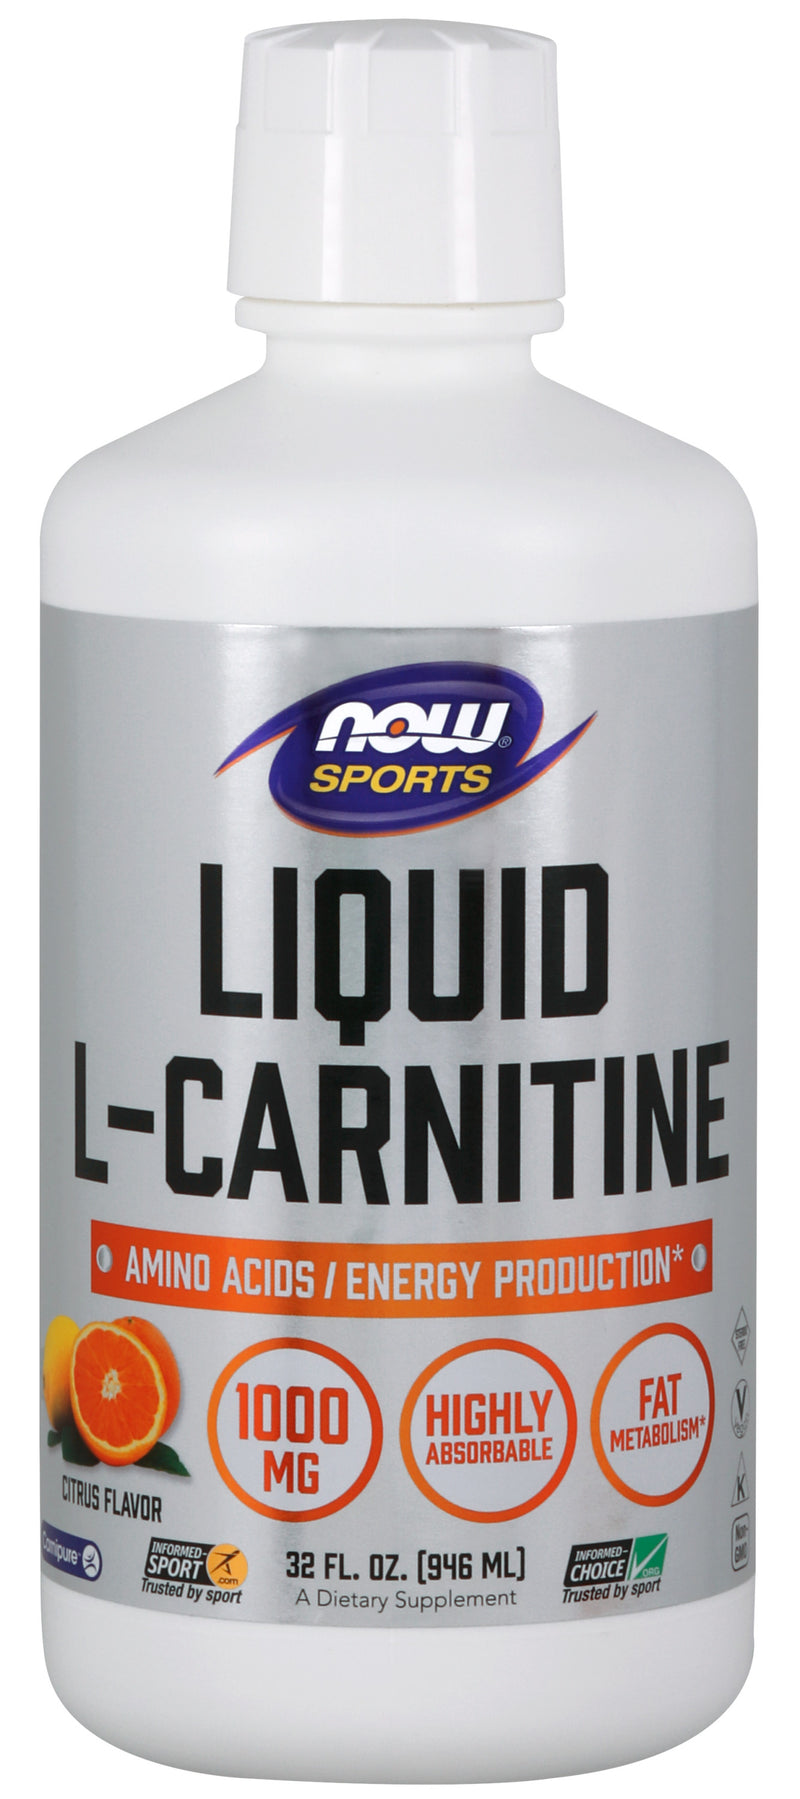 L-Carnitine Liquid Citrus Flavor 1000 mg 32 fl oz (946 ml) | By Now Foods - Best Price